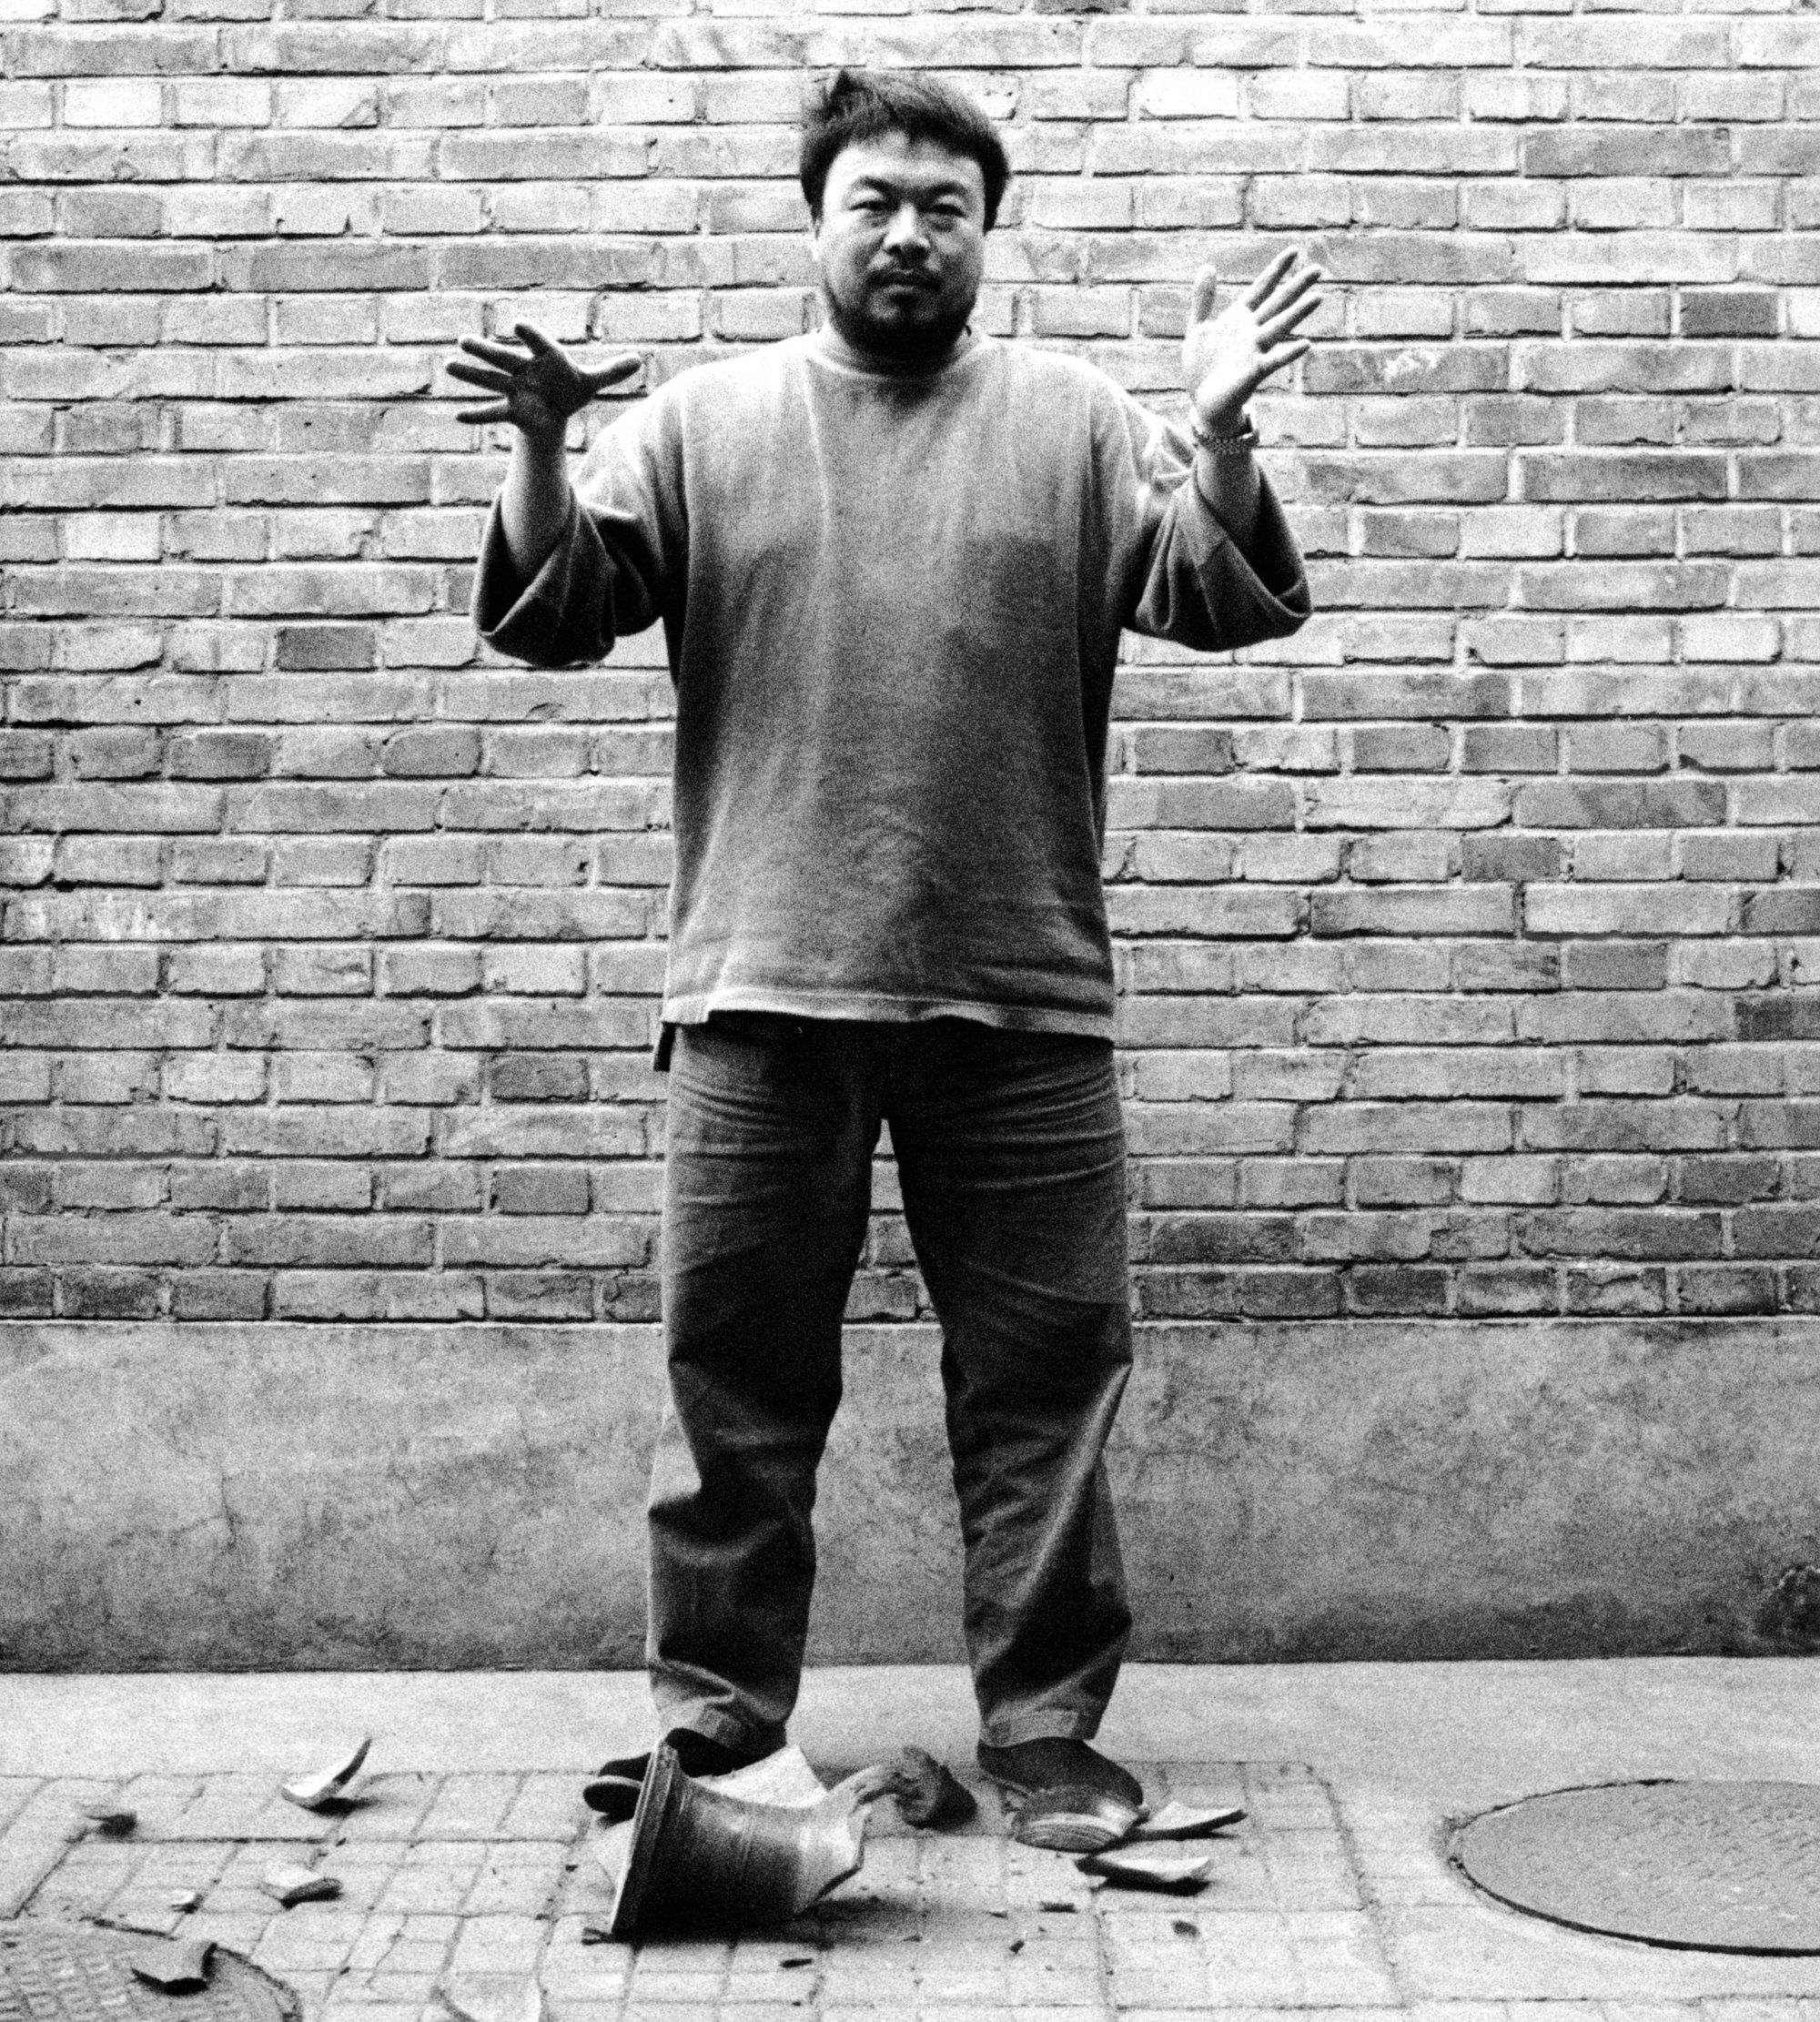 Why did Ai Weiwei break this milliondollar vase?